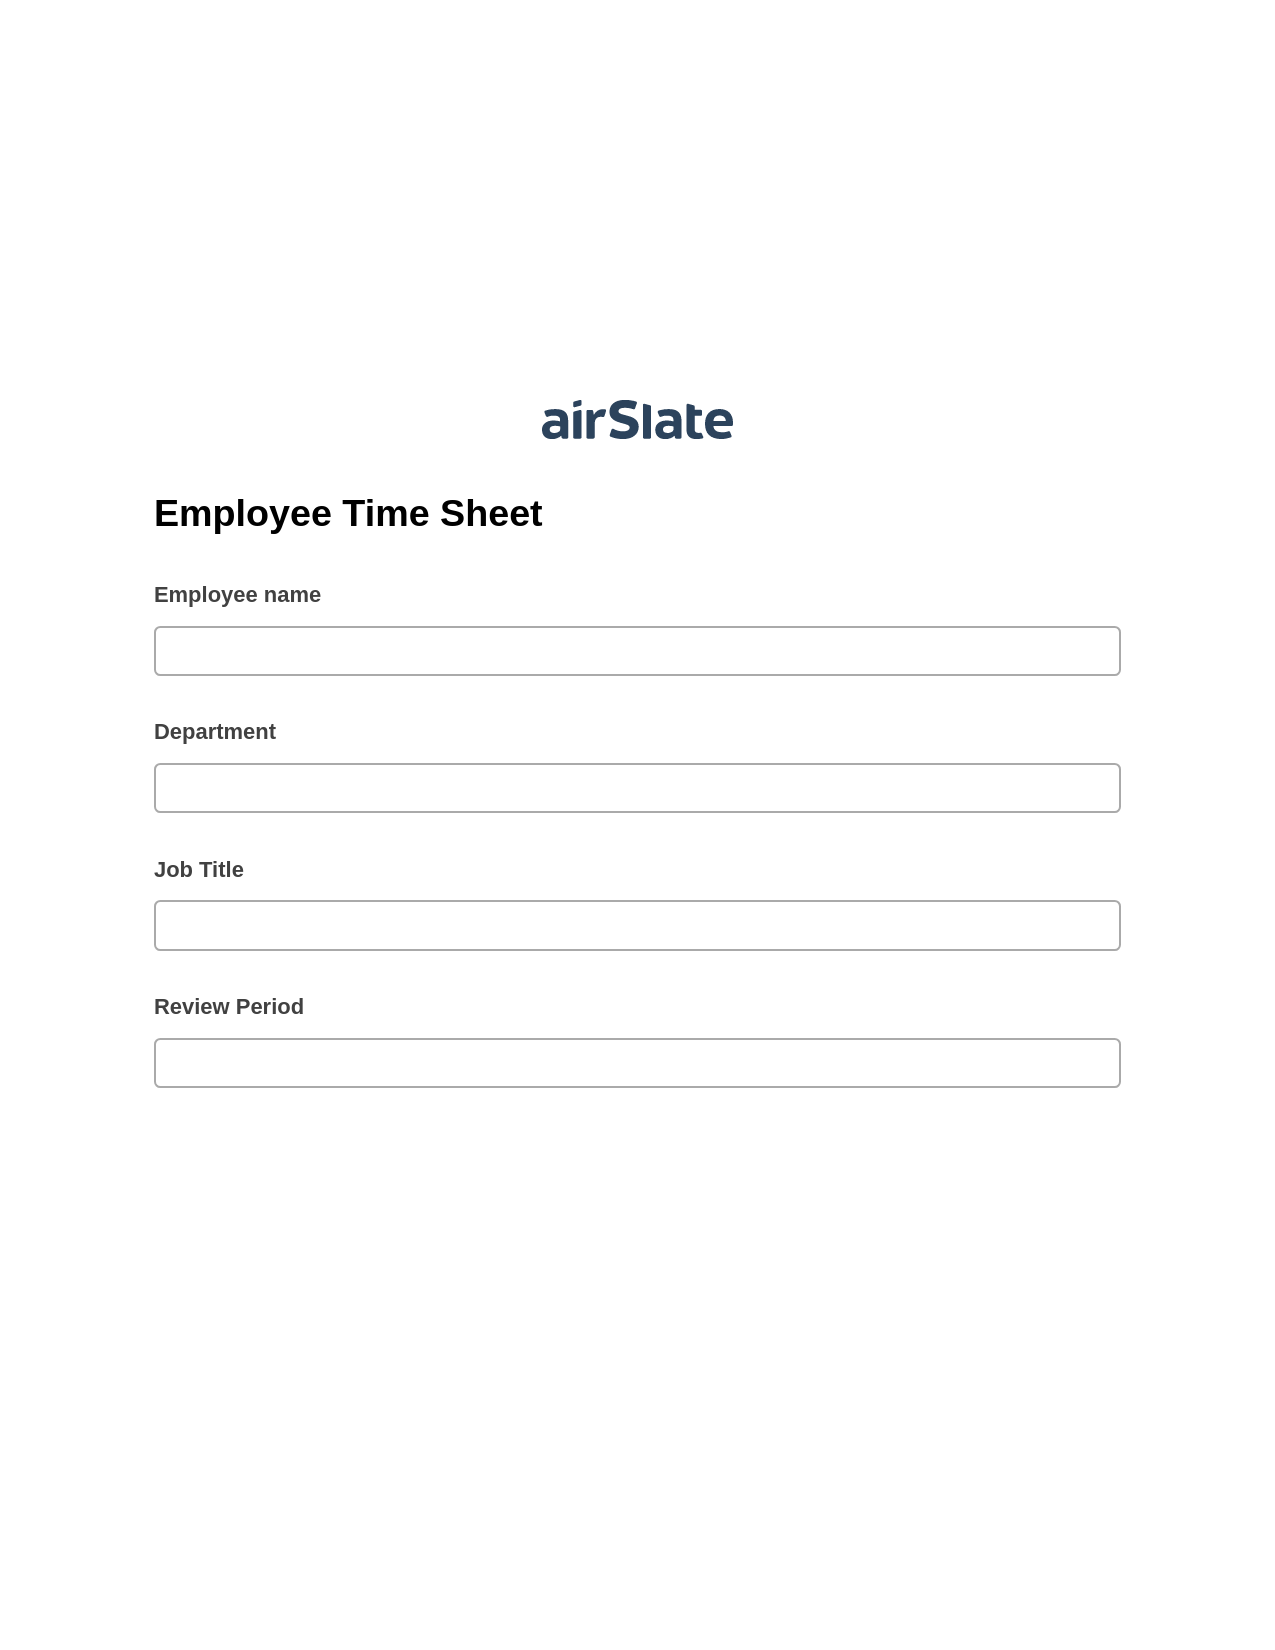 Multirole Employee Time Sheet Pre-fill from Google Sheets Bot, Create slate addon, Post-finish Document Bot